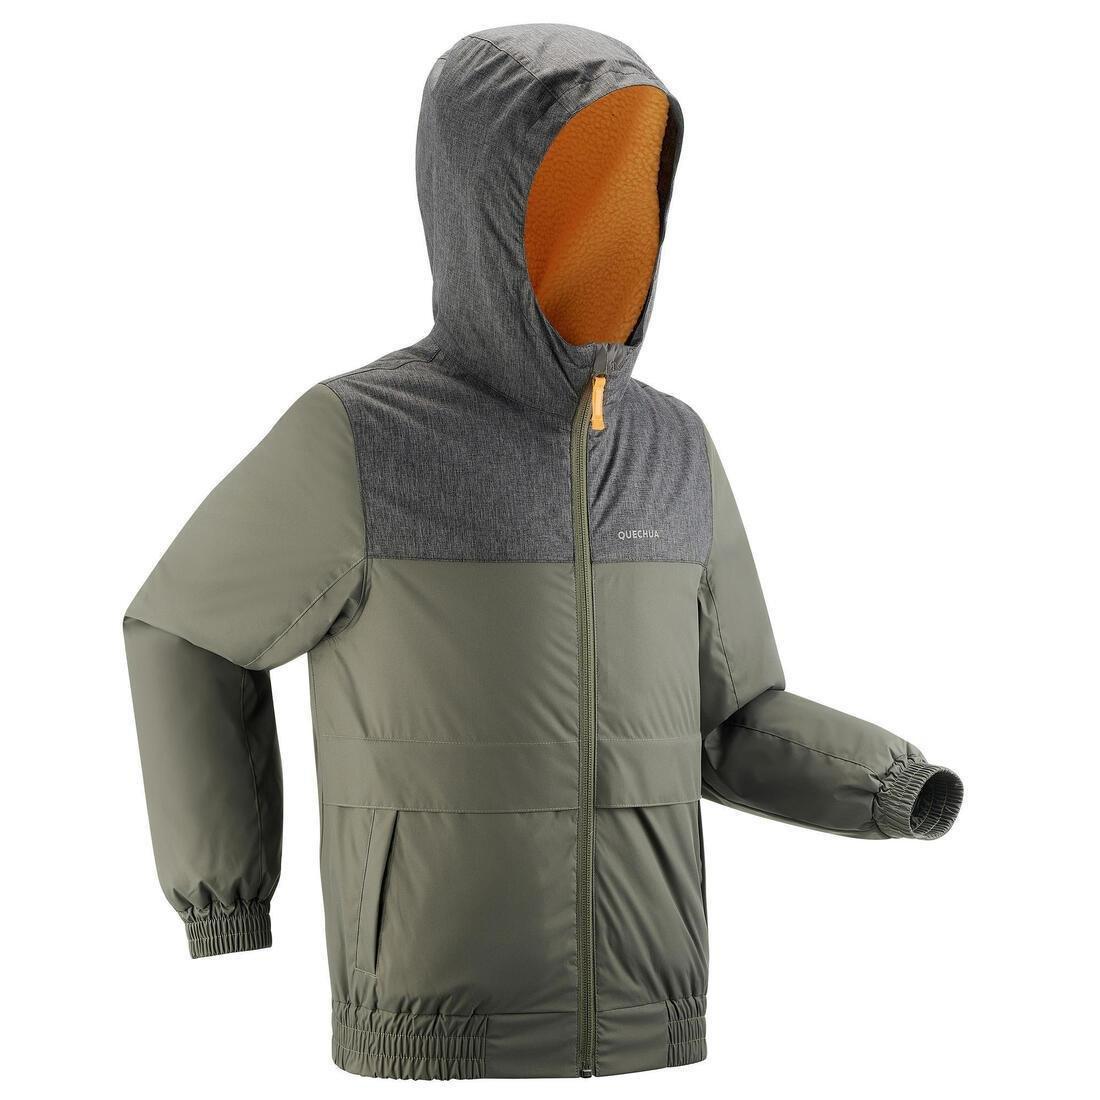 QUECHUA - Kids Waterproof Winter Hiking Jacket - Sh100 X-Warm -1C, Khaki